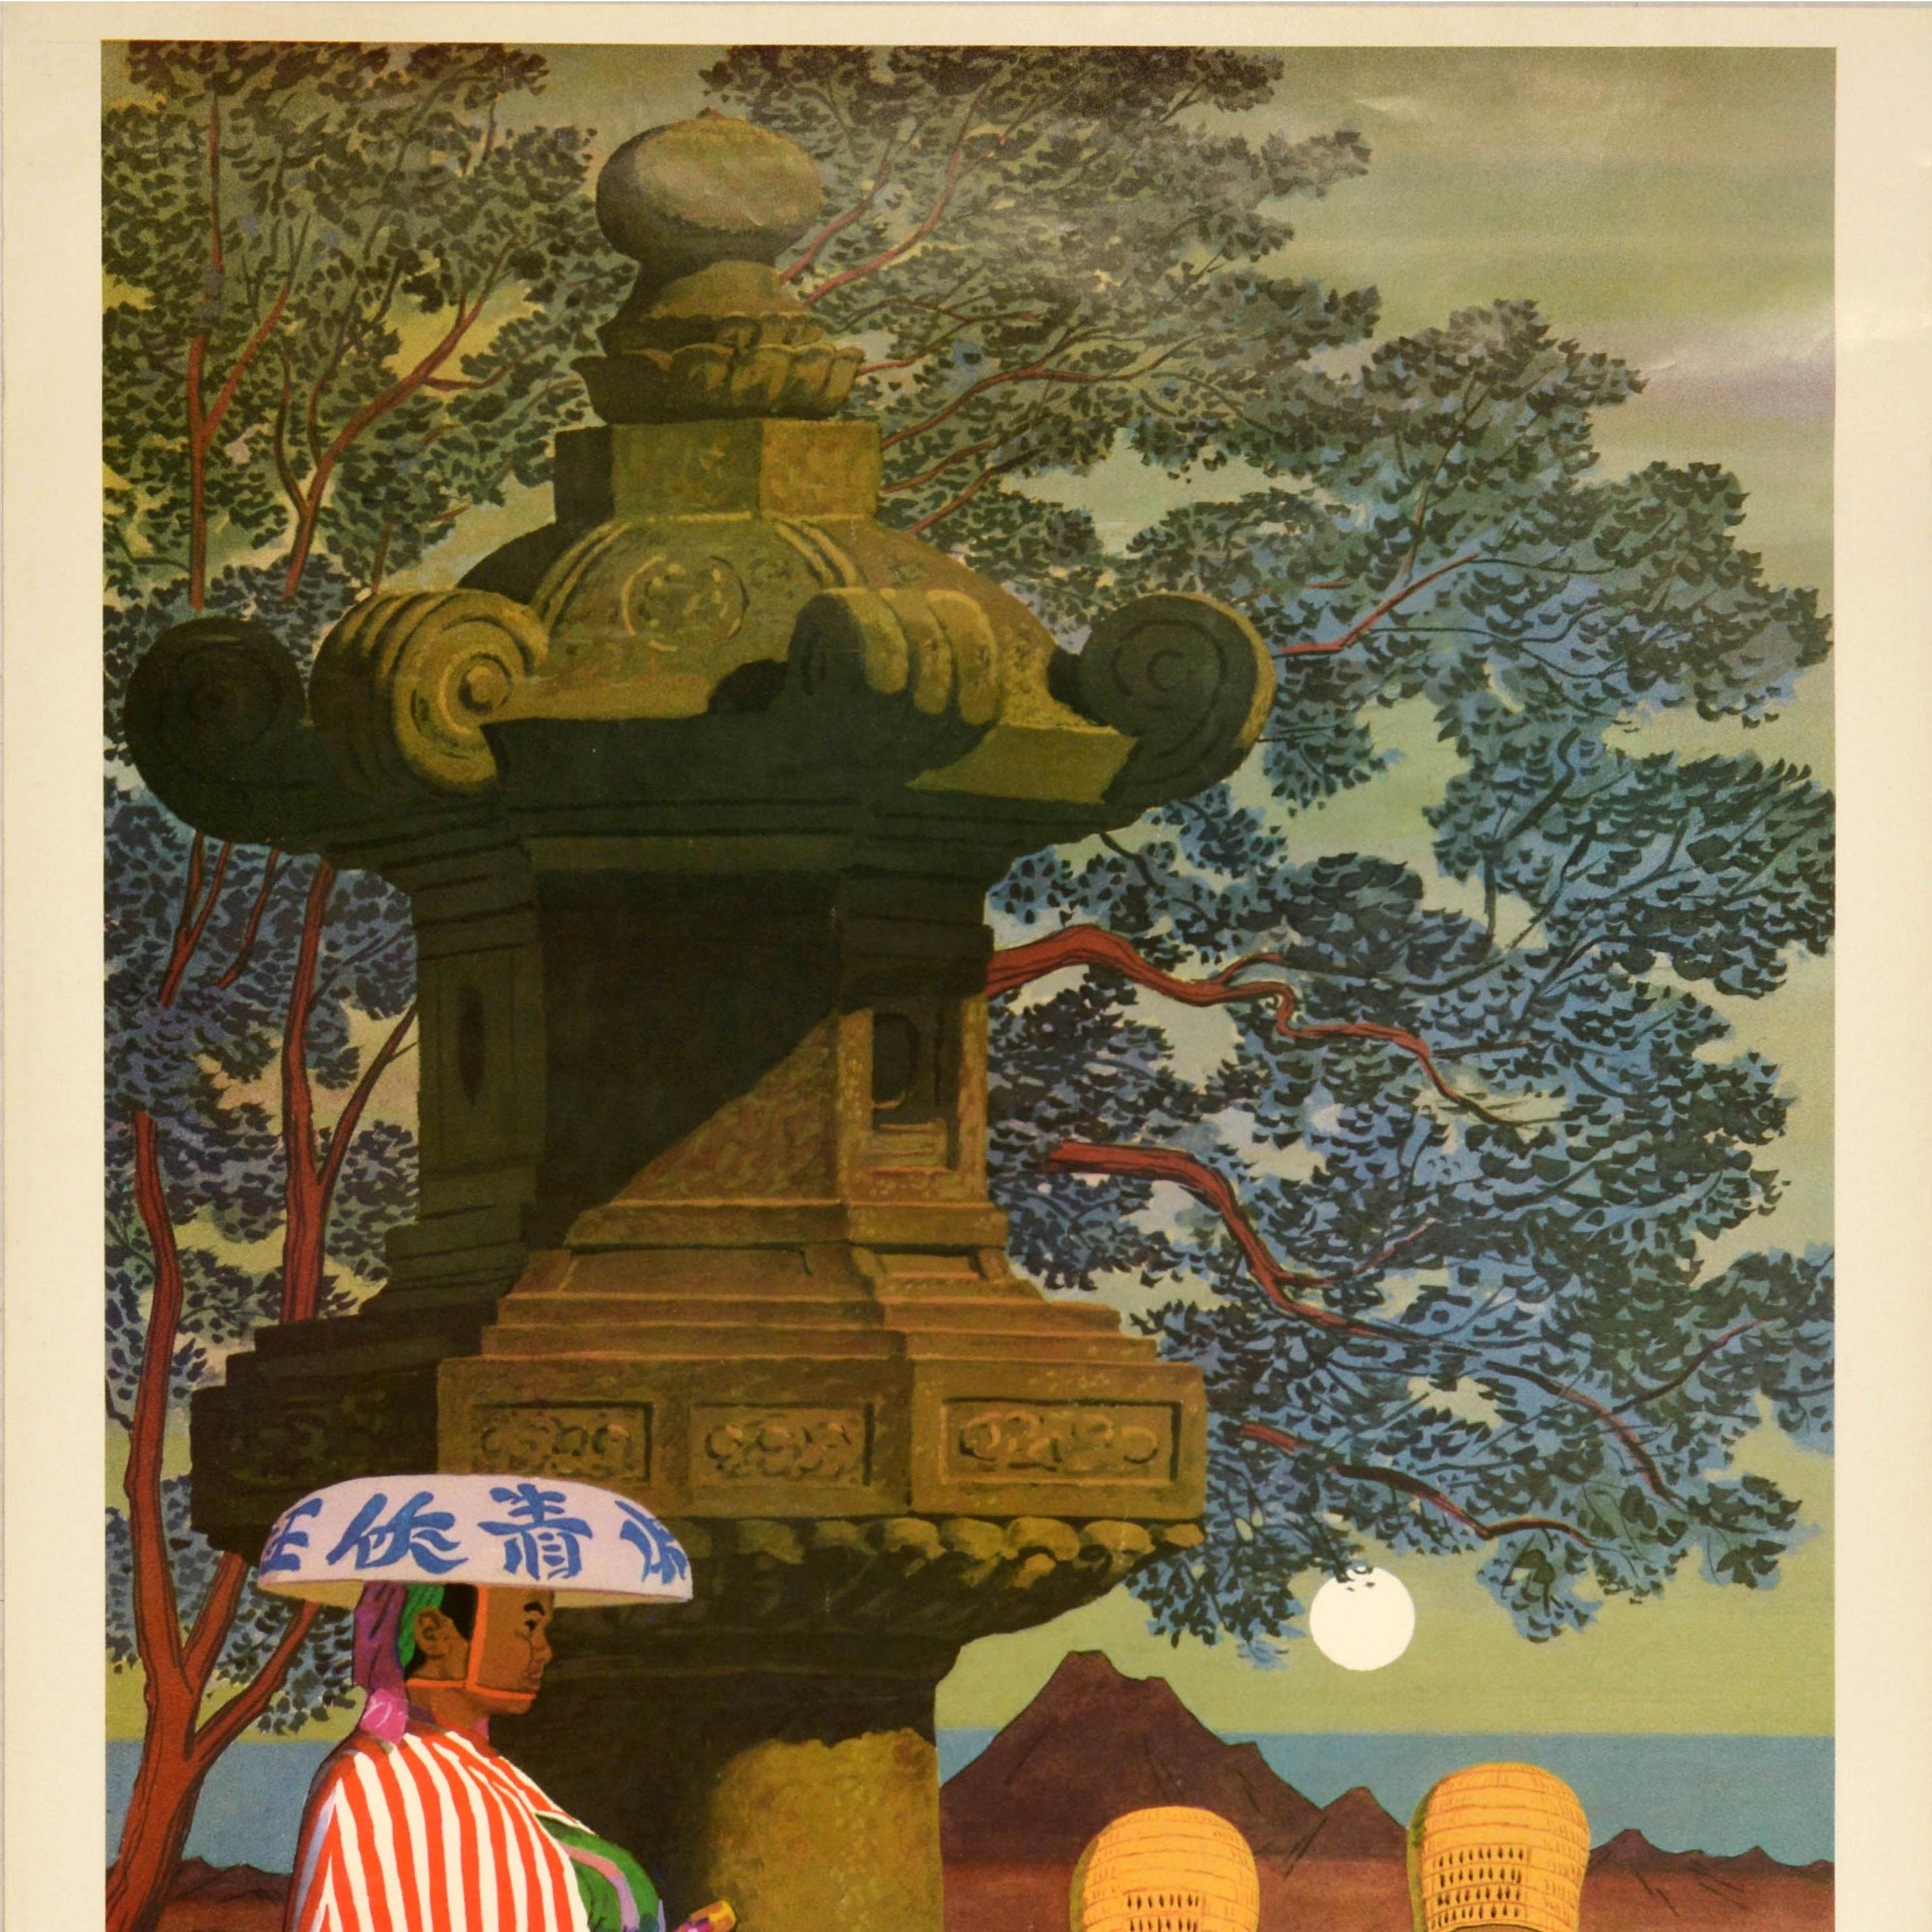 Original Vintage Travel Poster Japan Ronin Samurai Komuso Zen Buddhism Monks - Brown Print by Unknown